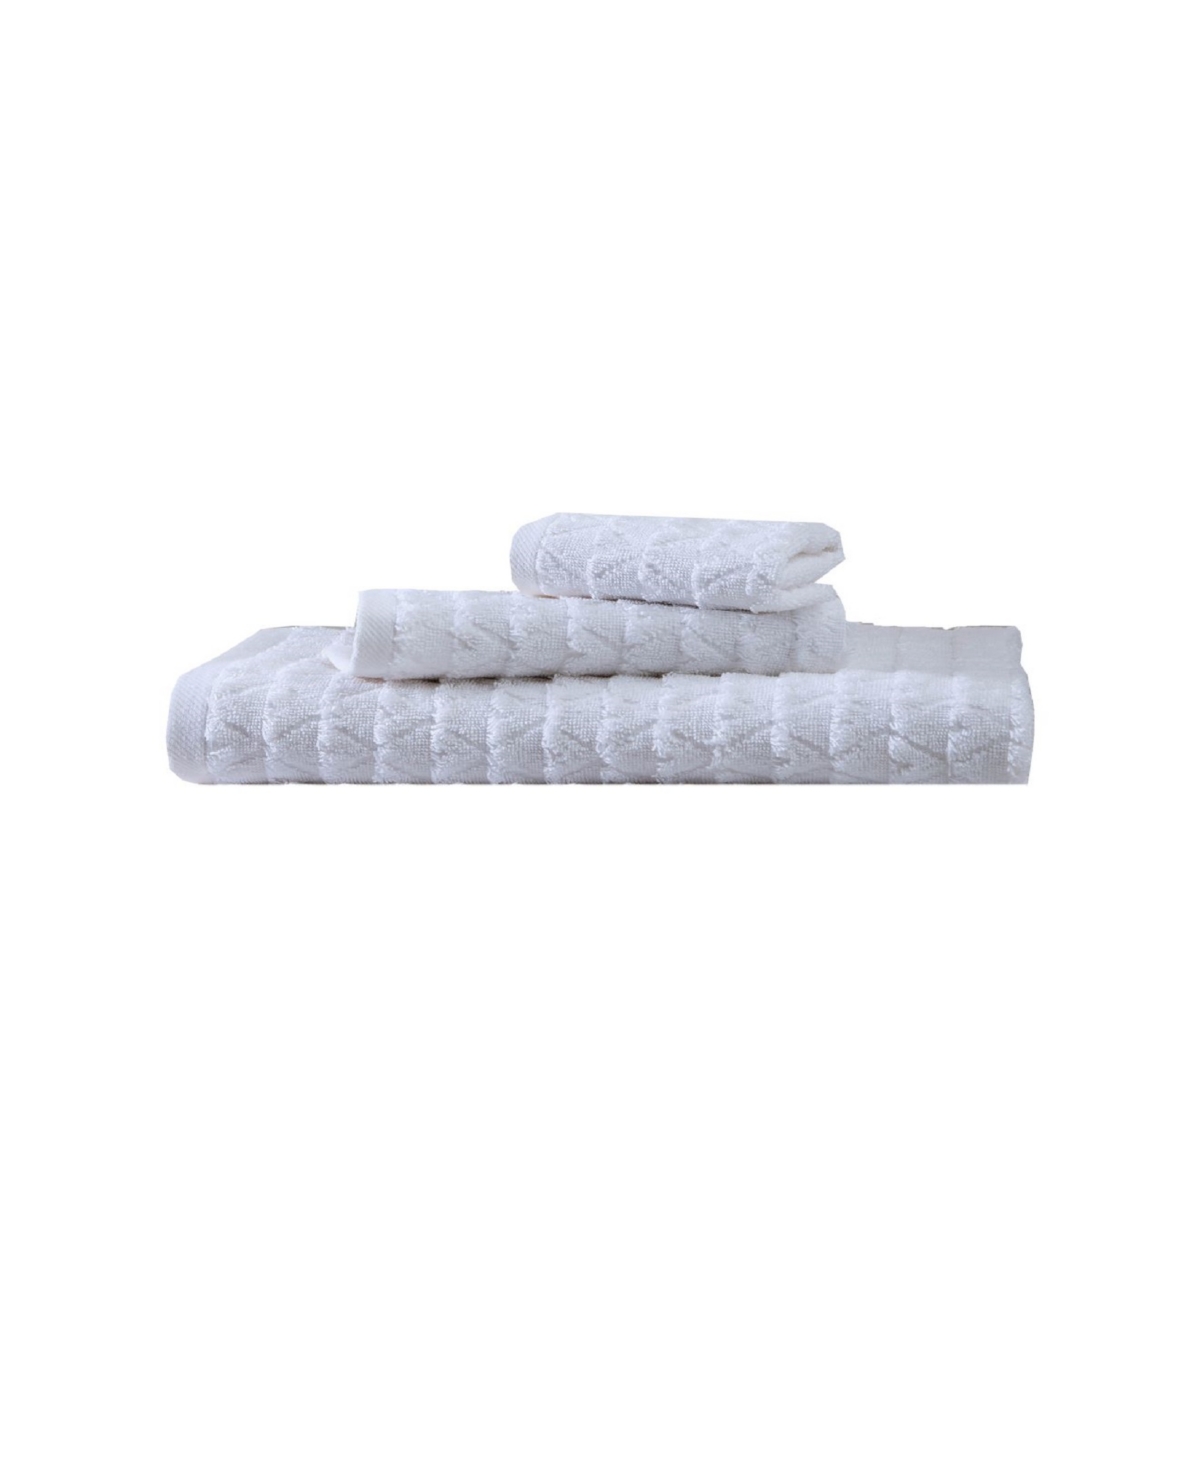 Ozan Premium Home Azure Collection 3 Piece Turkish Cotton Luxury Towel Set Bedding In White